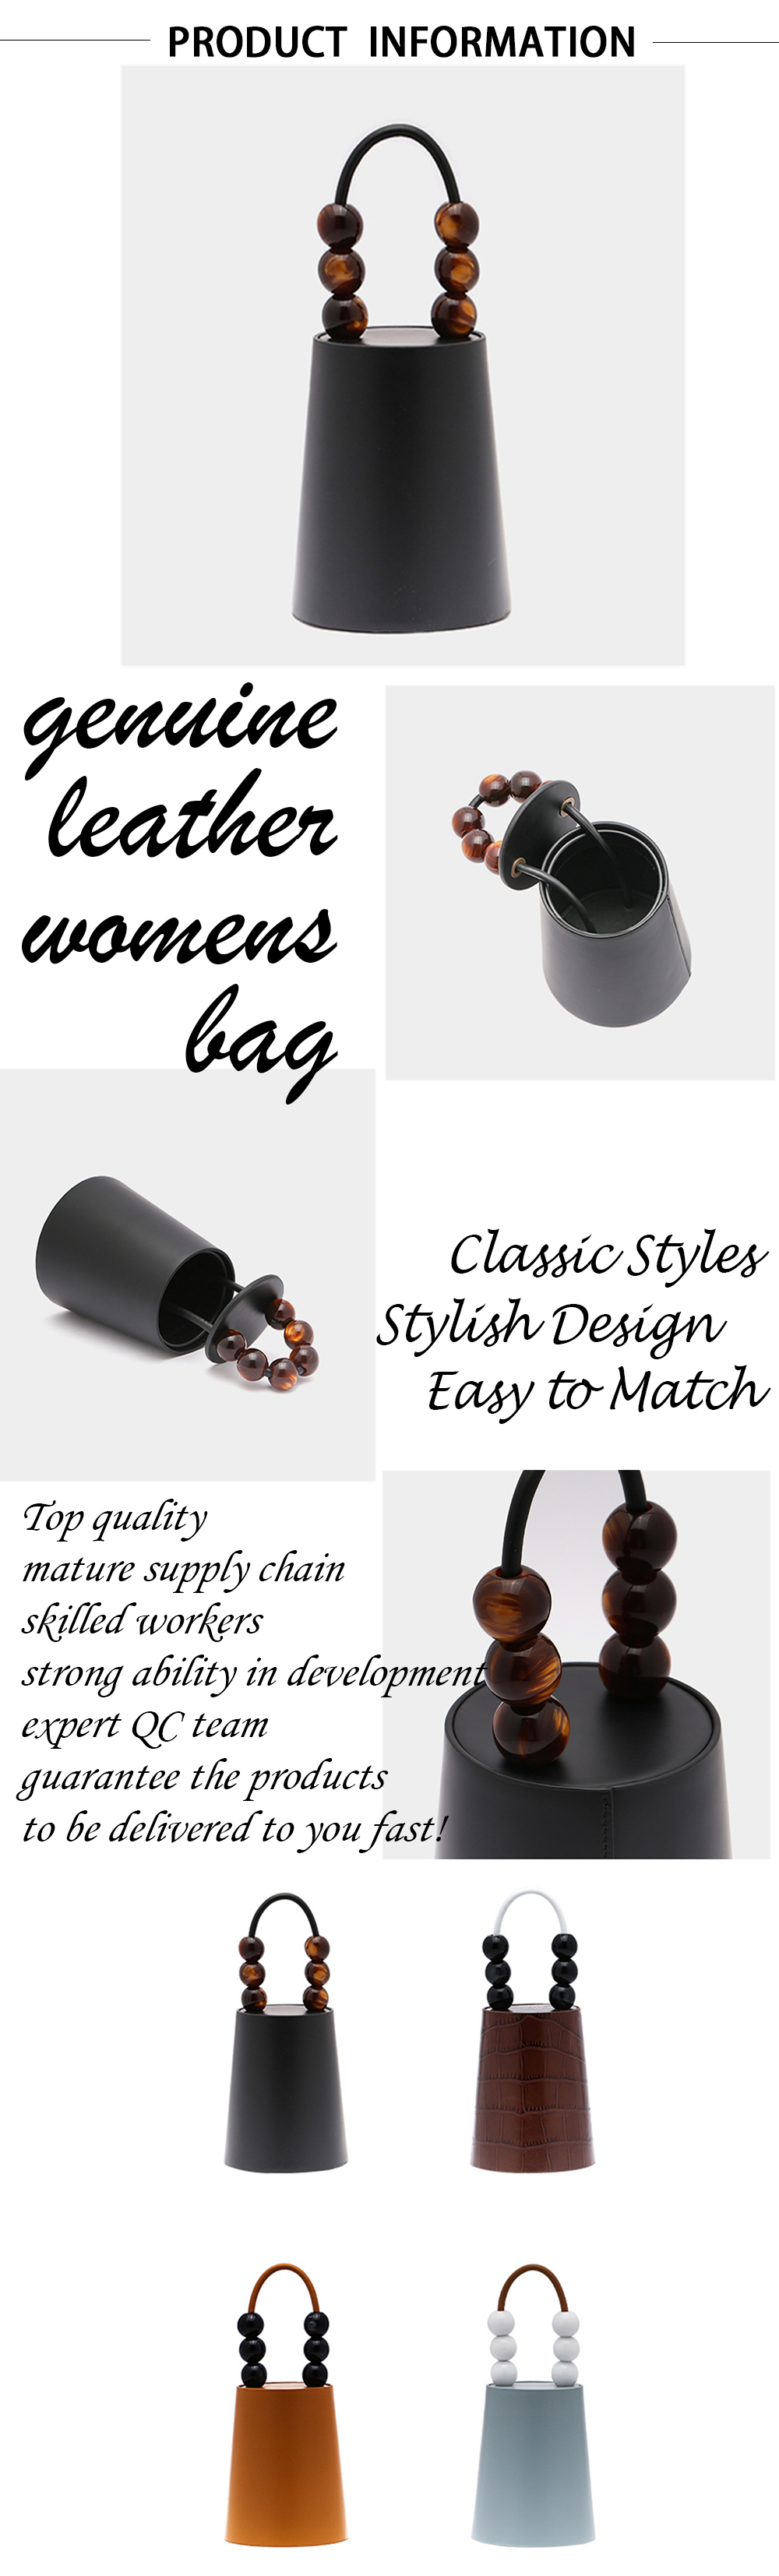 Genuine Leather Women Bag